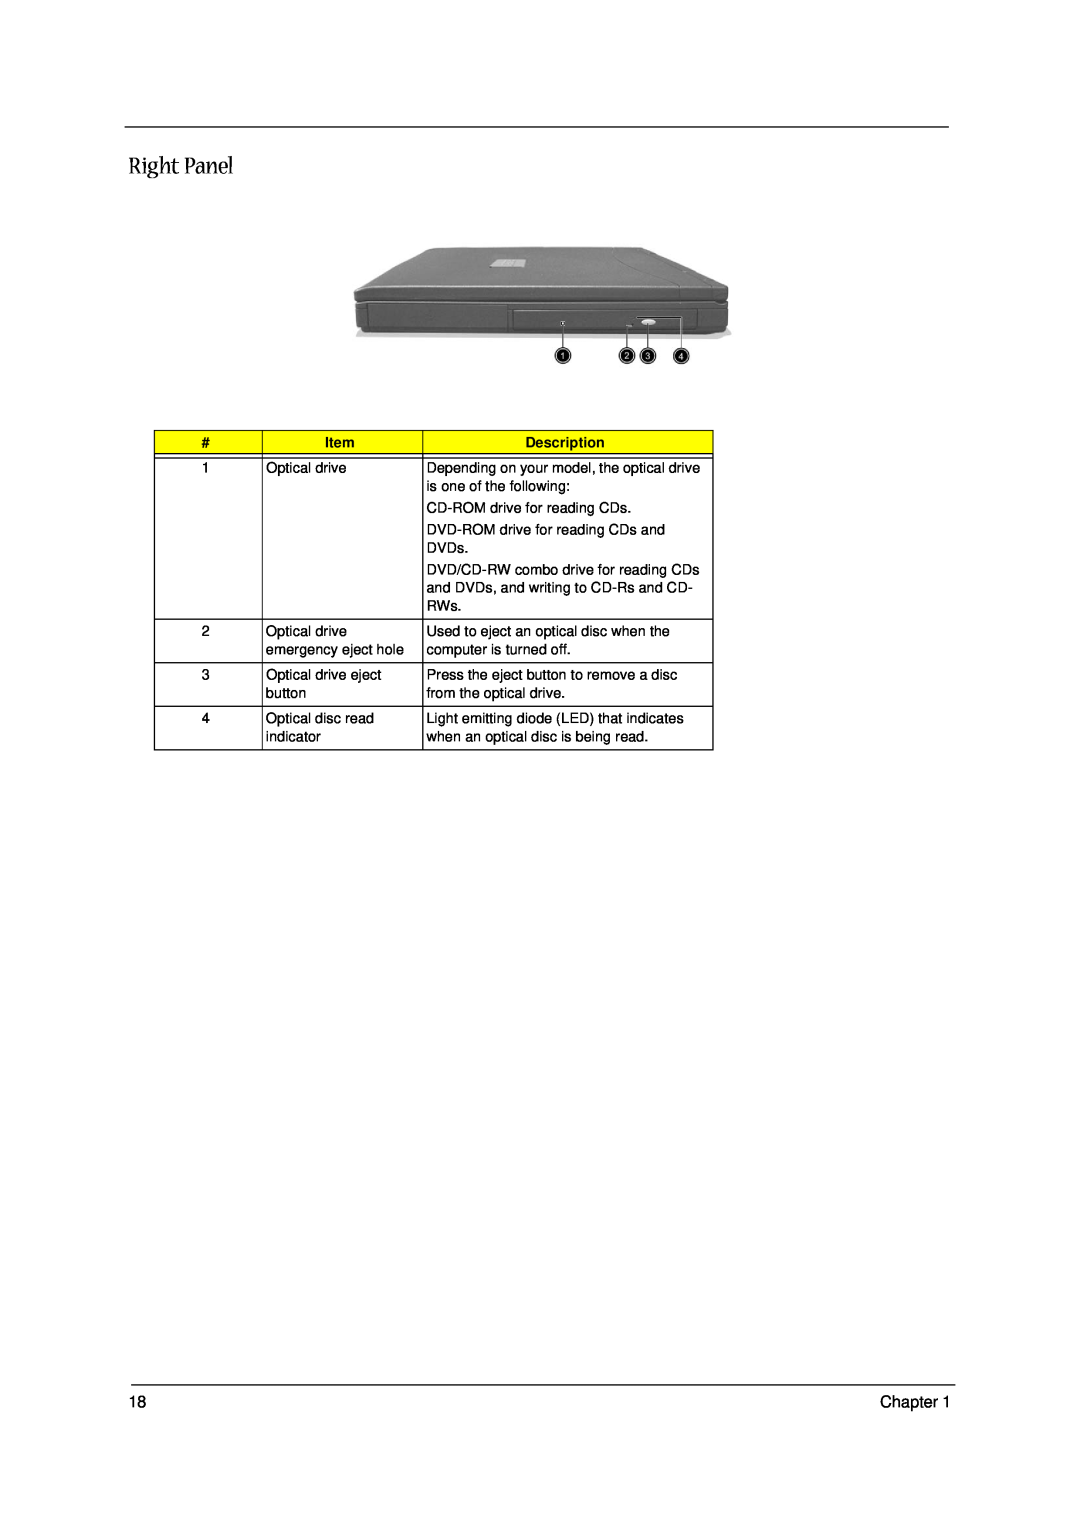 Acer 1300 Series manual Right Panel, Description 